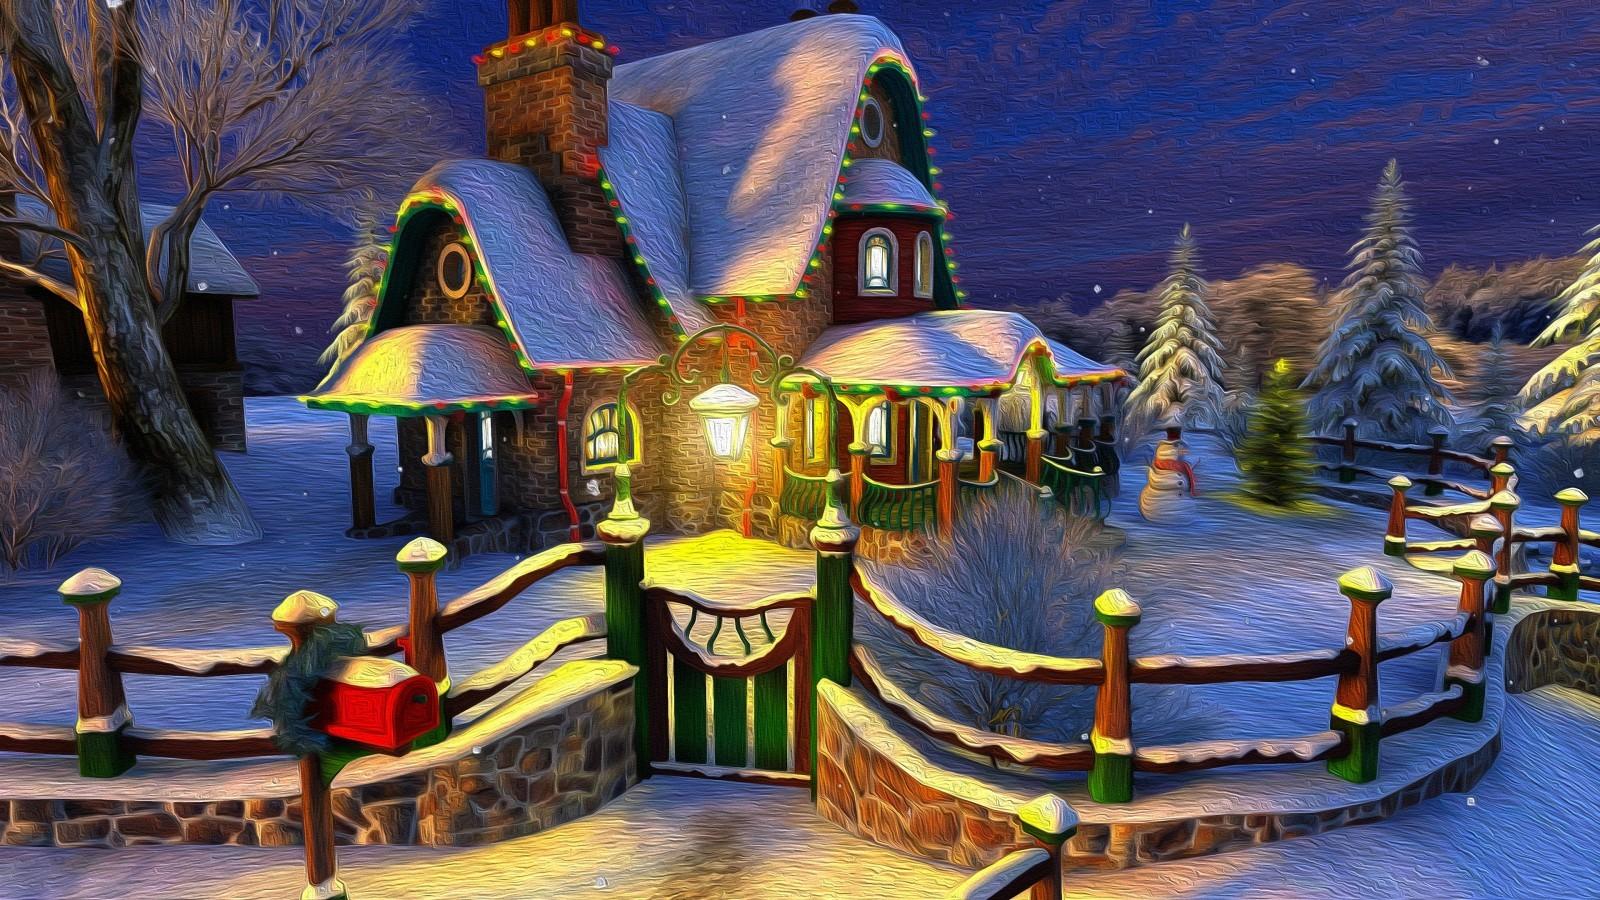 Download 1600x900 Cozy House, Christmas Door, Fence, Snow